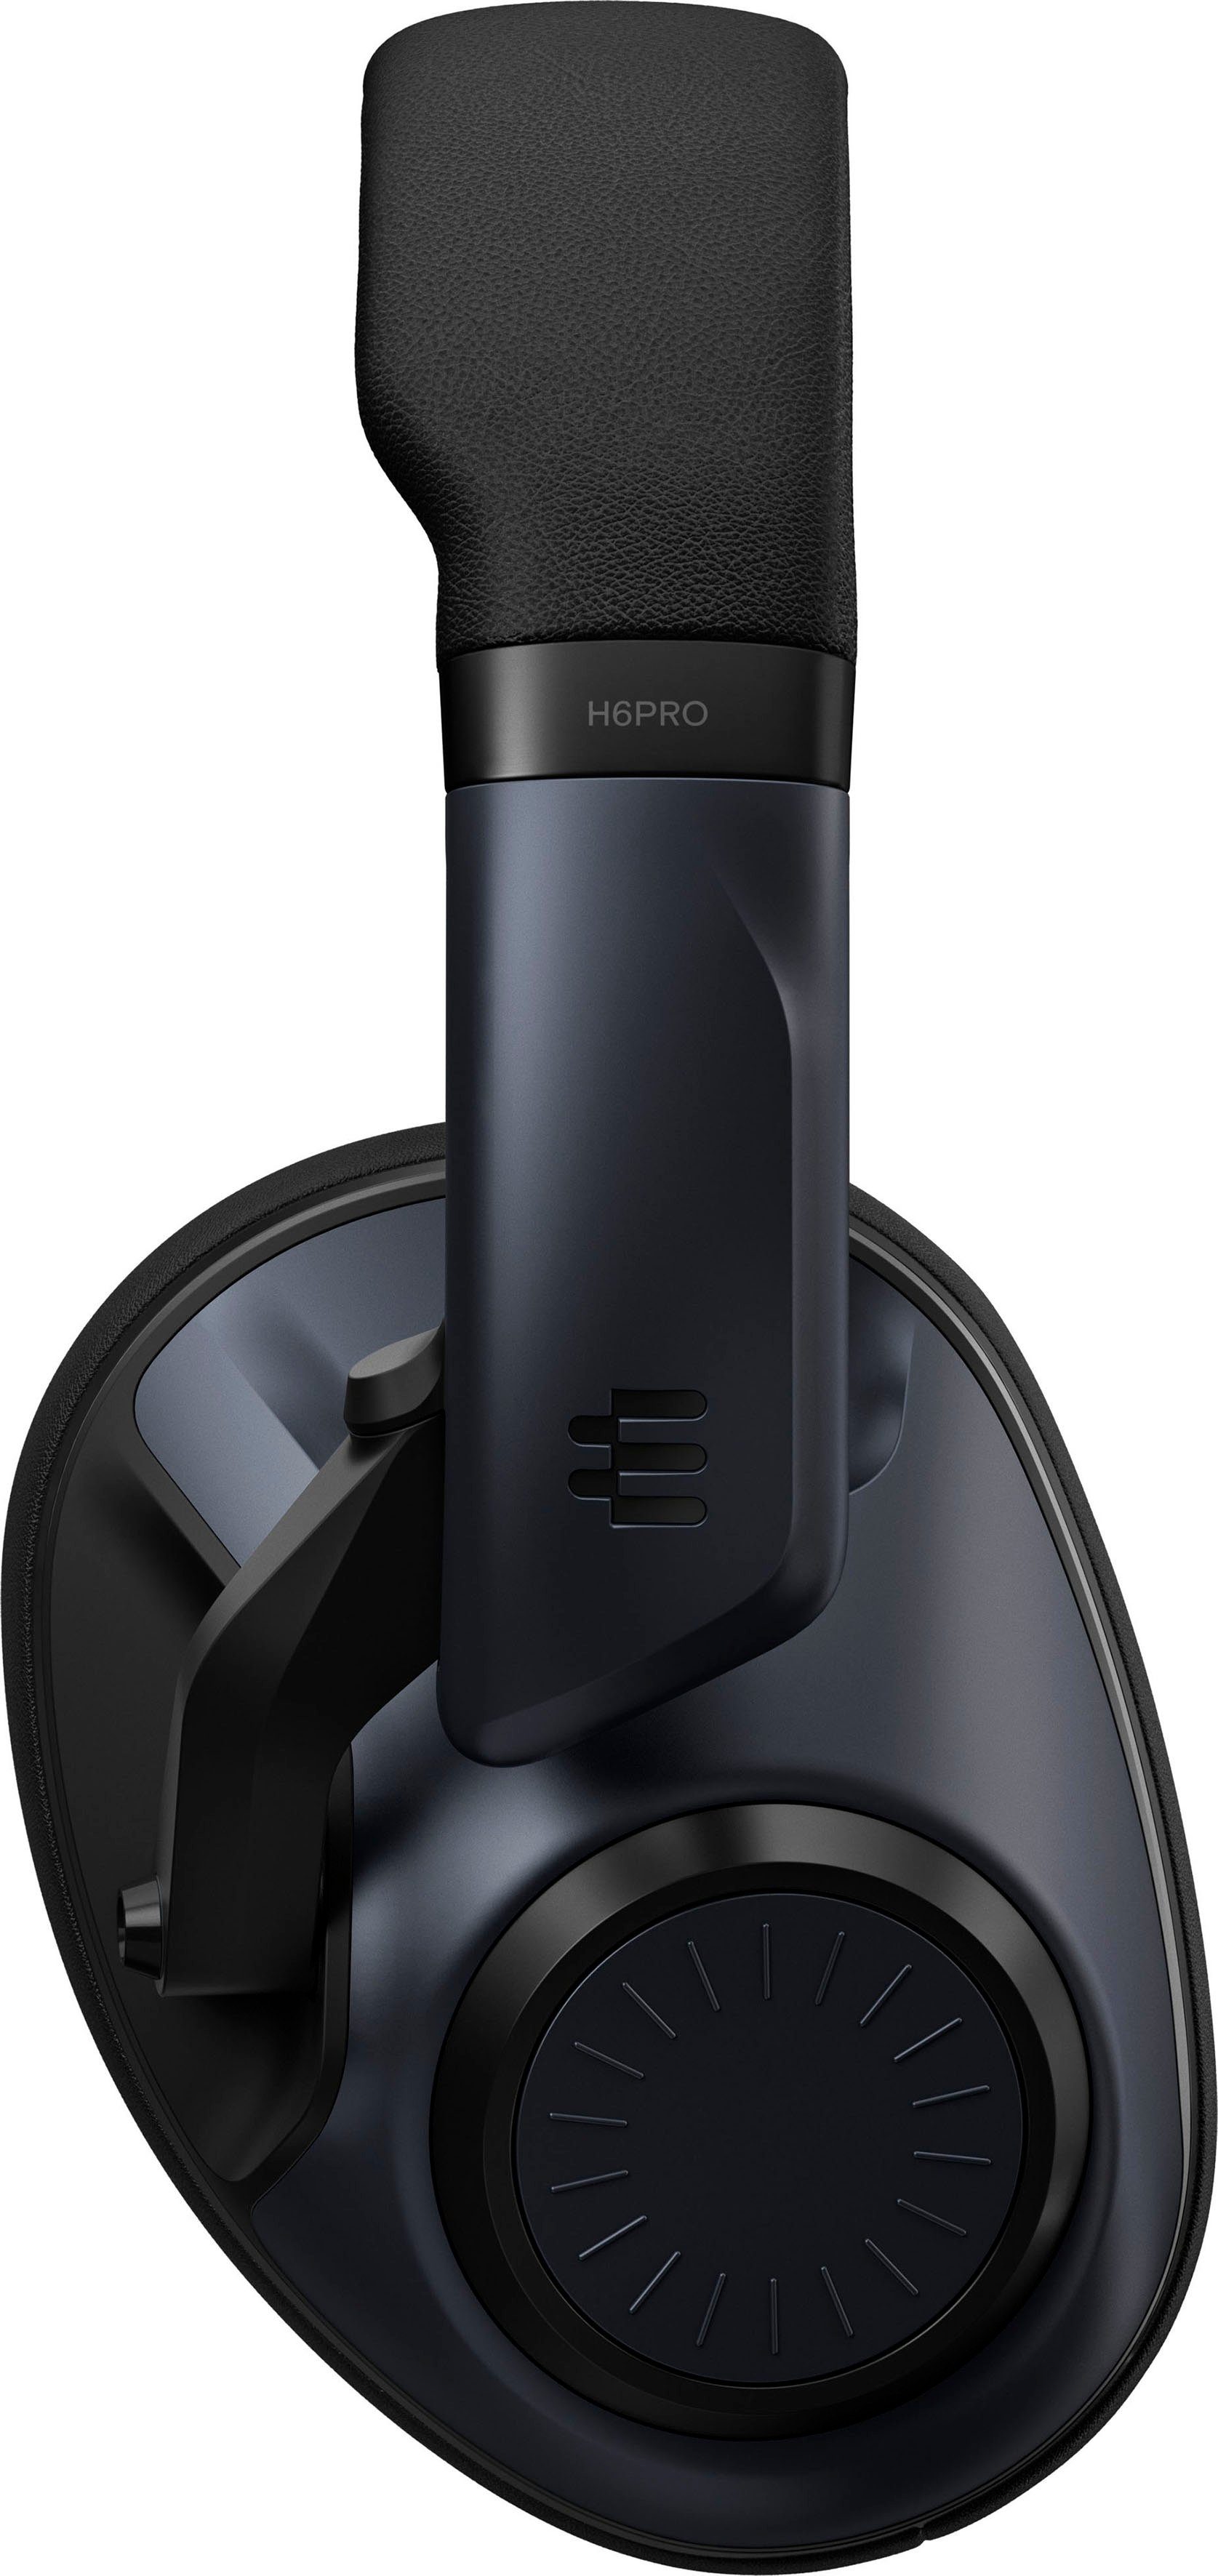 Acoustic EPOS H6 schwarz Closed Pro Gaming-Headset